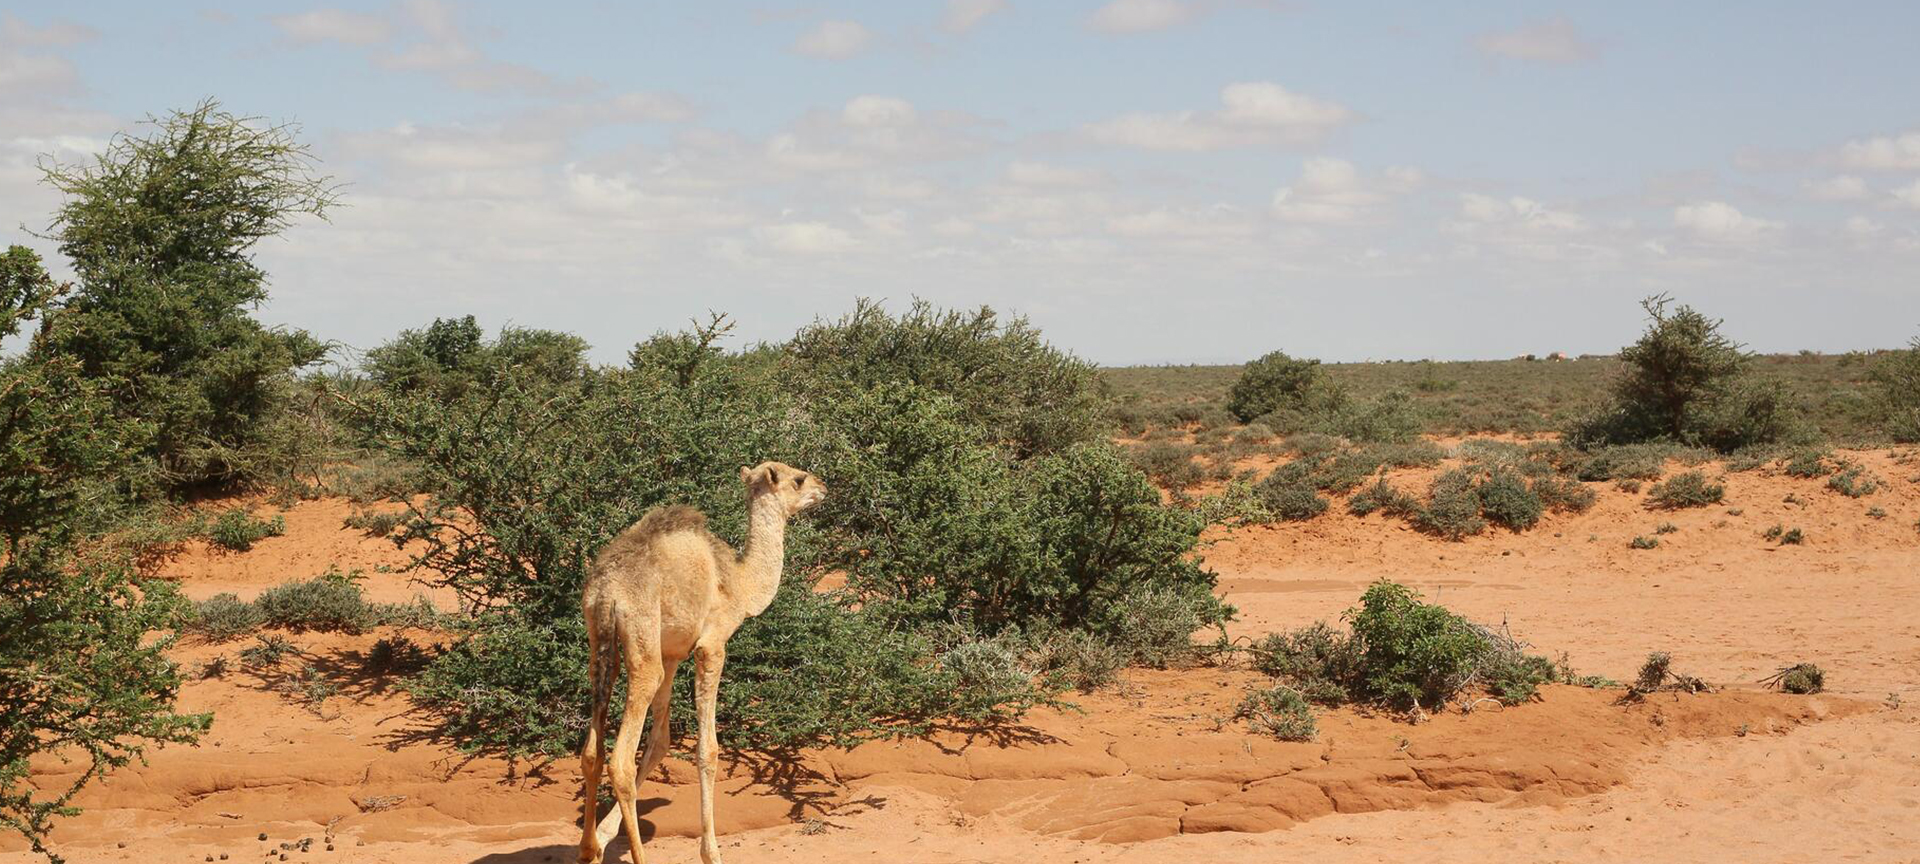 A single camel walks along a desert area. 